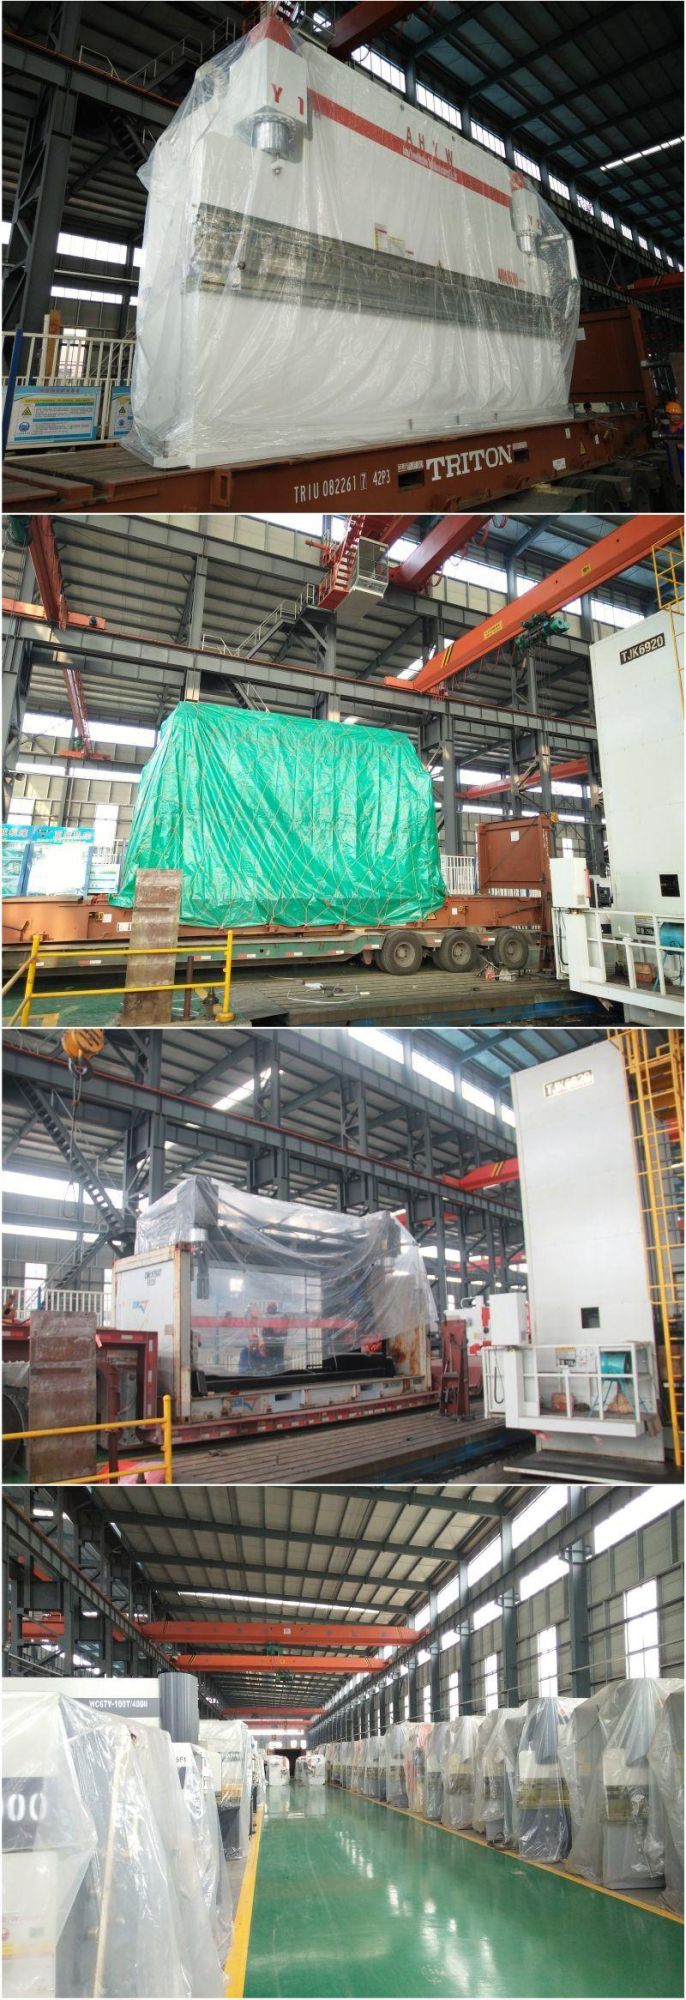 Ahyw Anhui Yawei Transformer Industry Press Brake with Open Height Ssab Hardox Steel